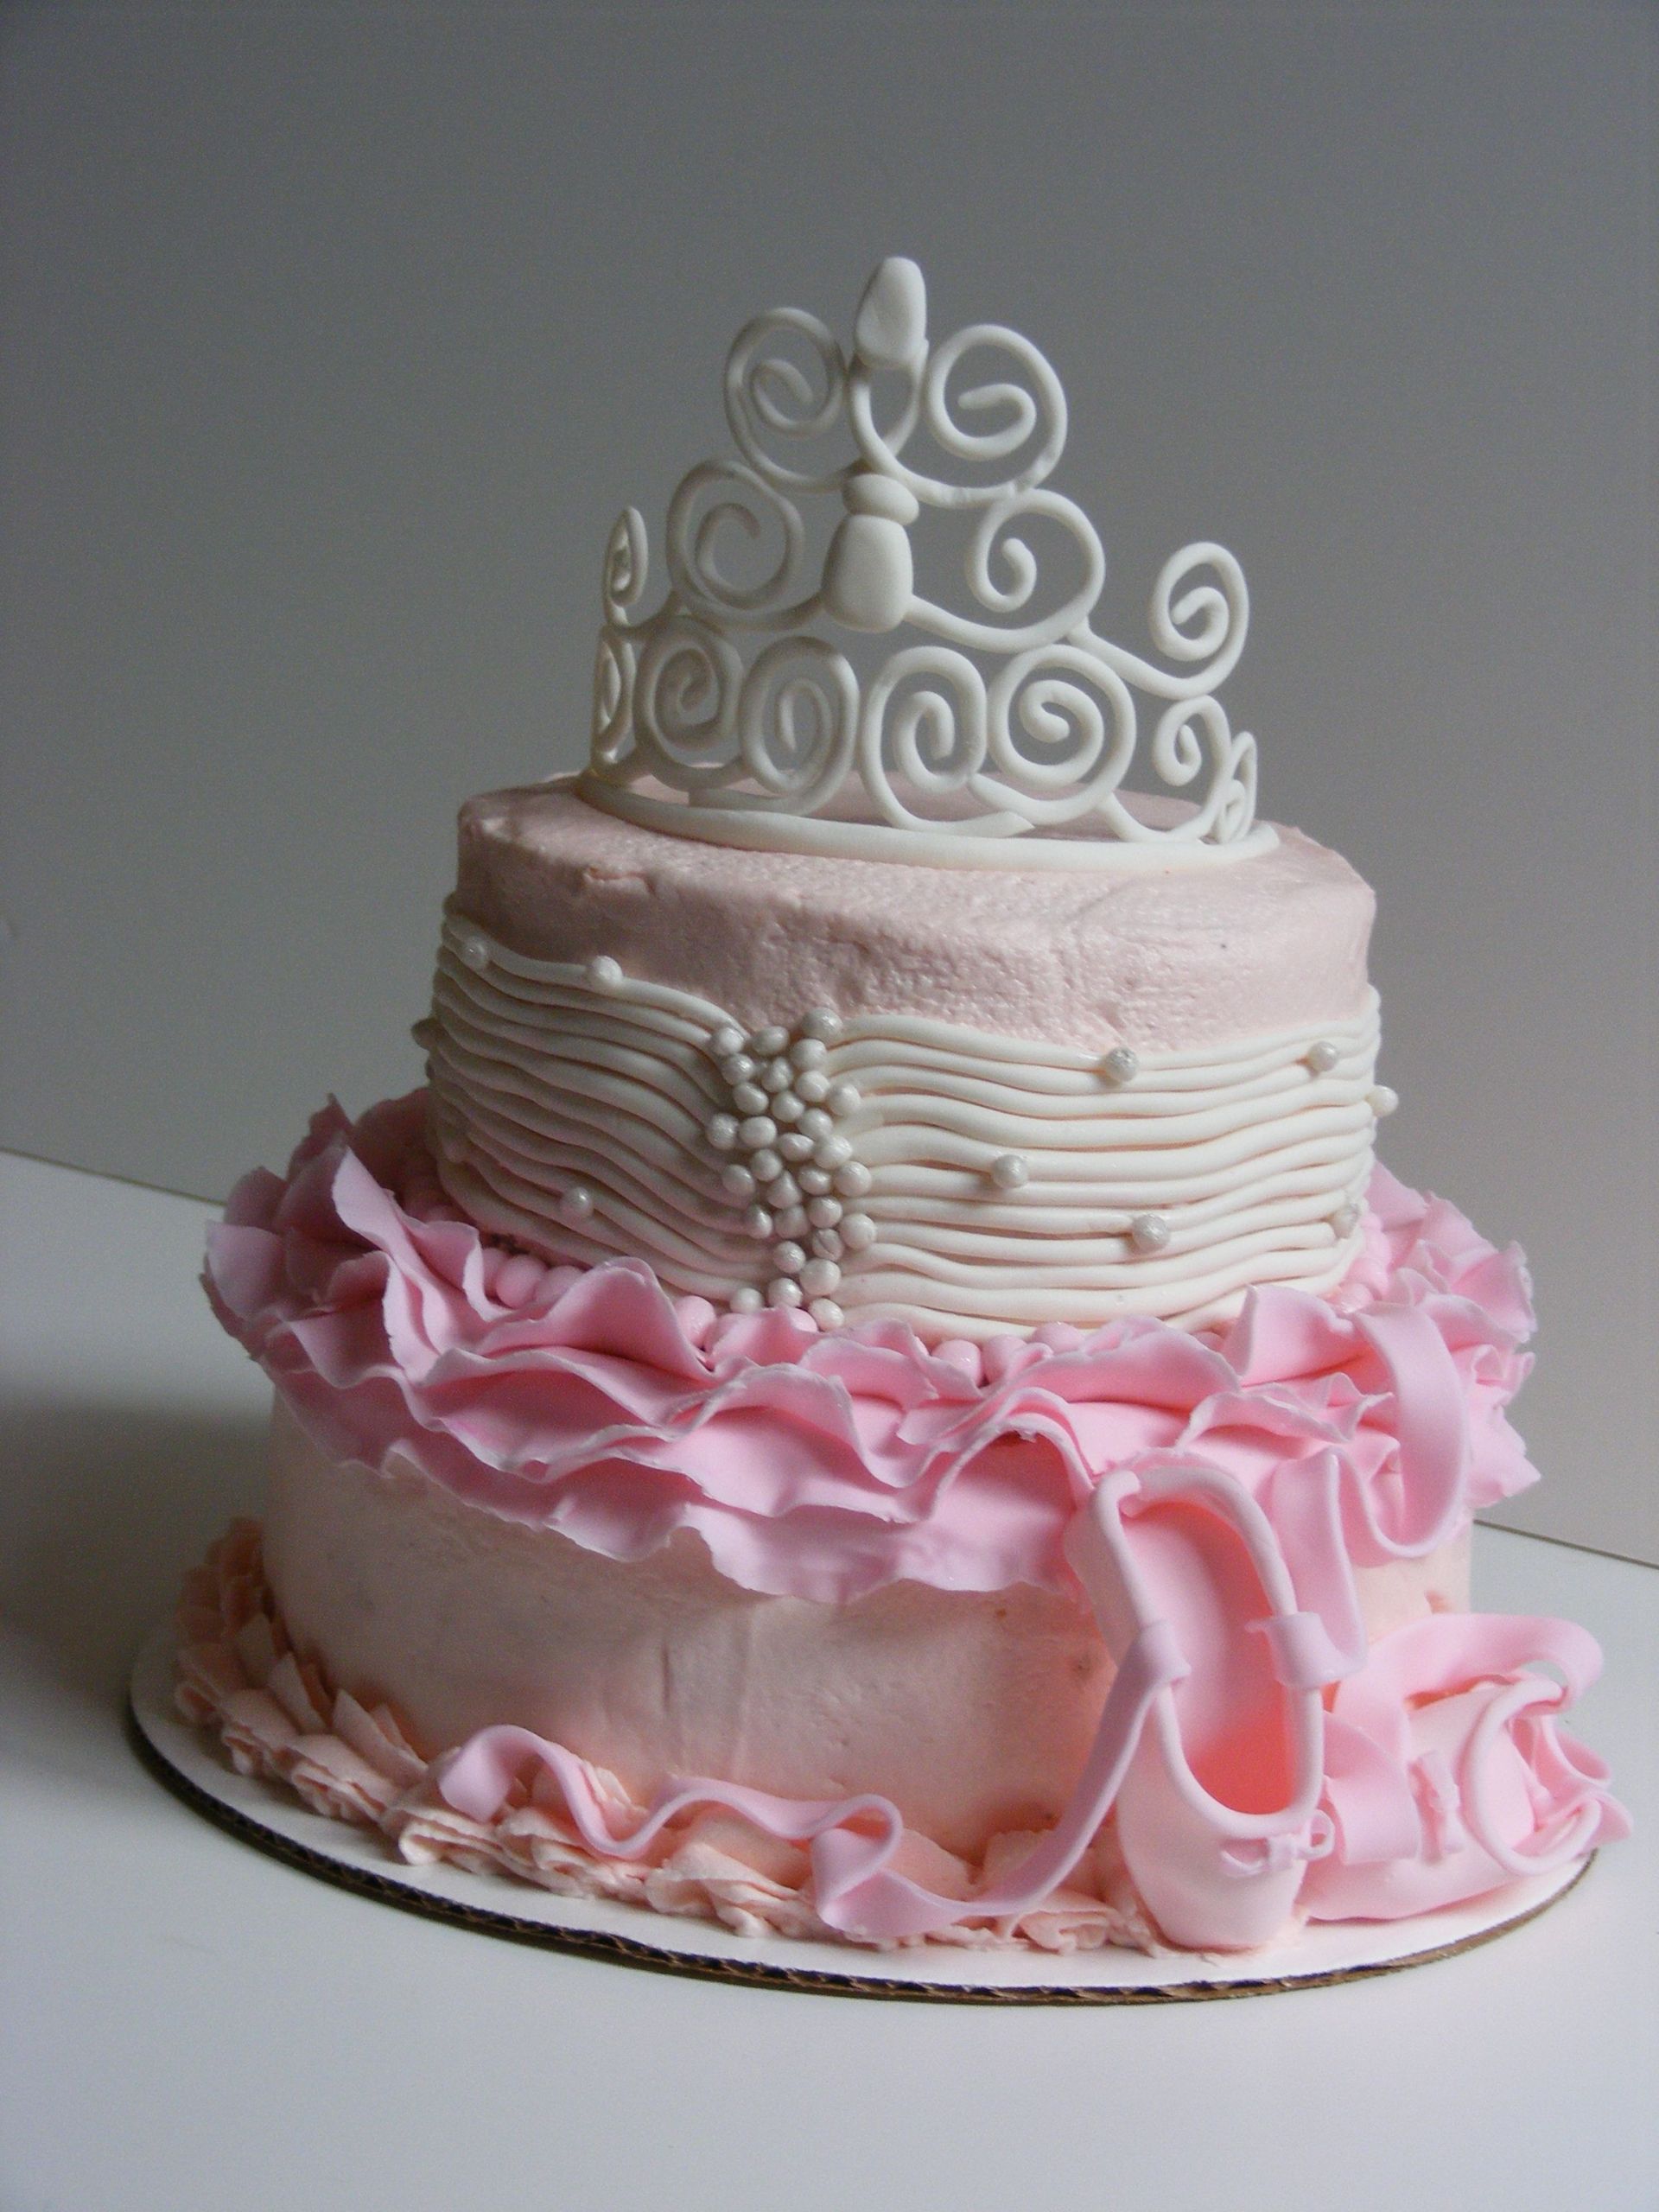 Birthday Party Ideas For 4 Year Girl
 Tutu Princess Cake A tutu princess cake for a 4 year old